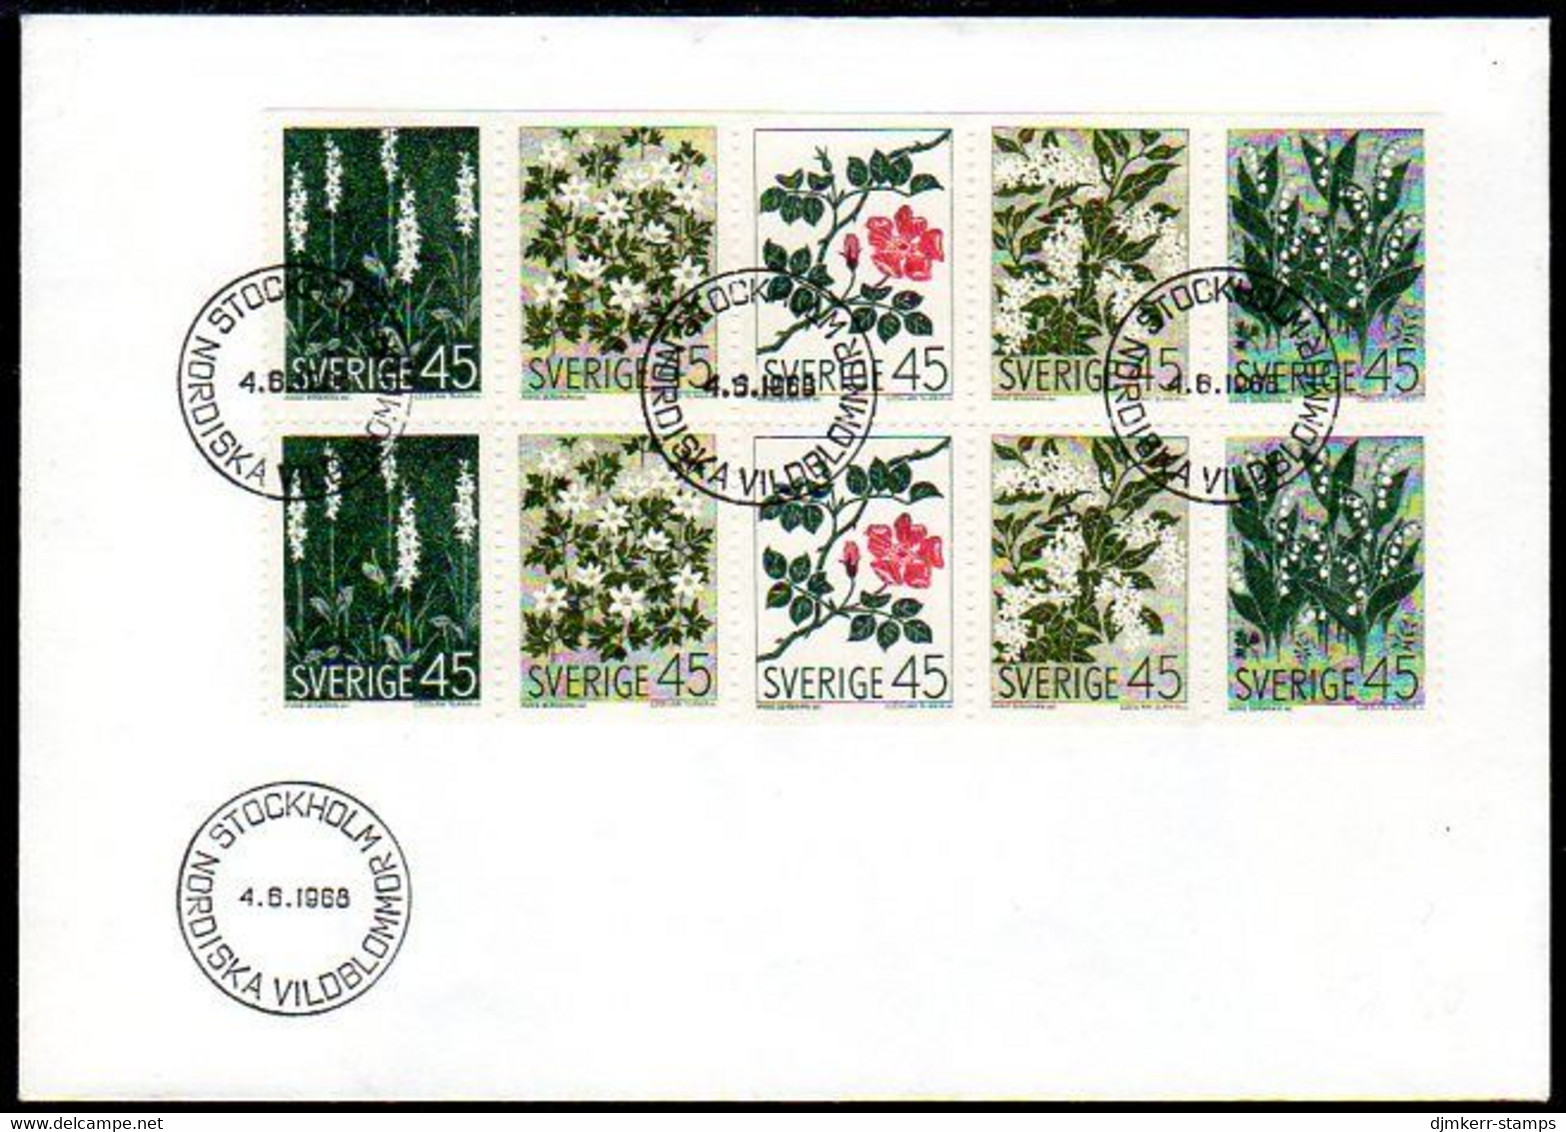 SWEDEN 1968 Flowers FDC.  Michel 607-11 - FDC